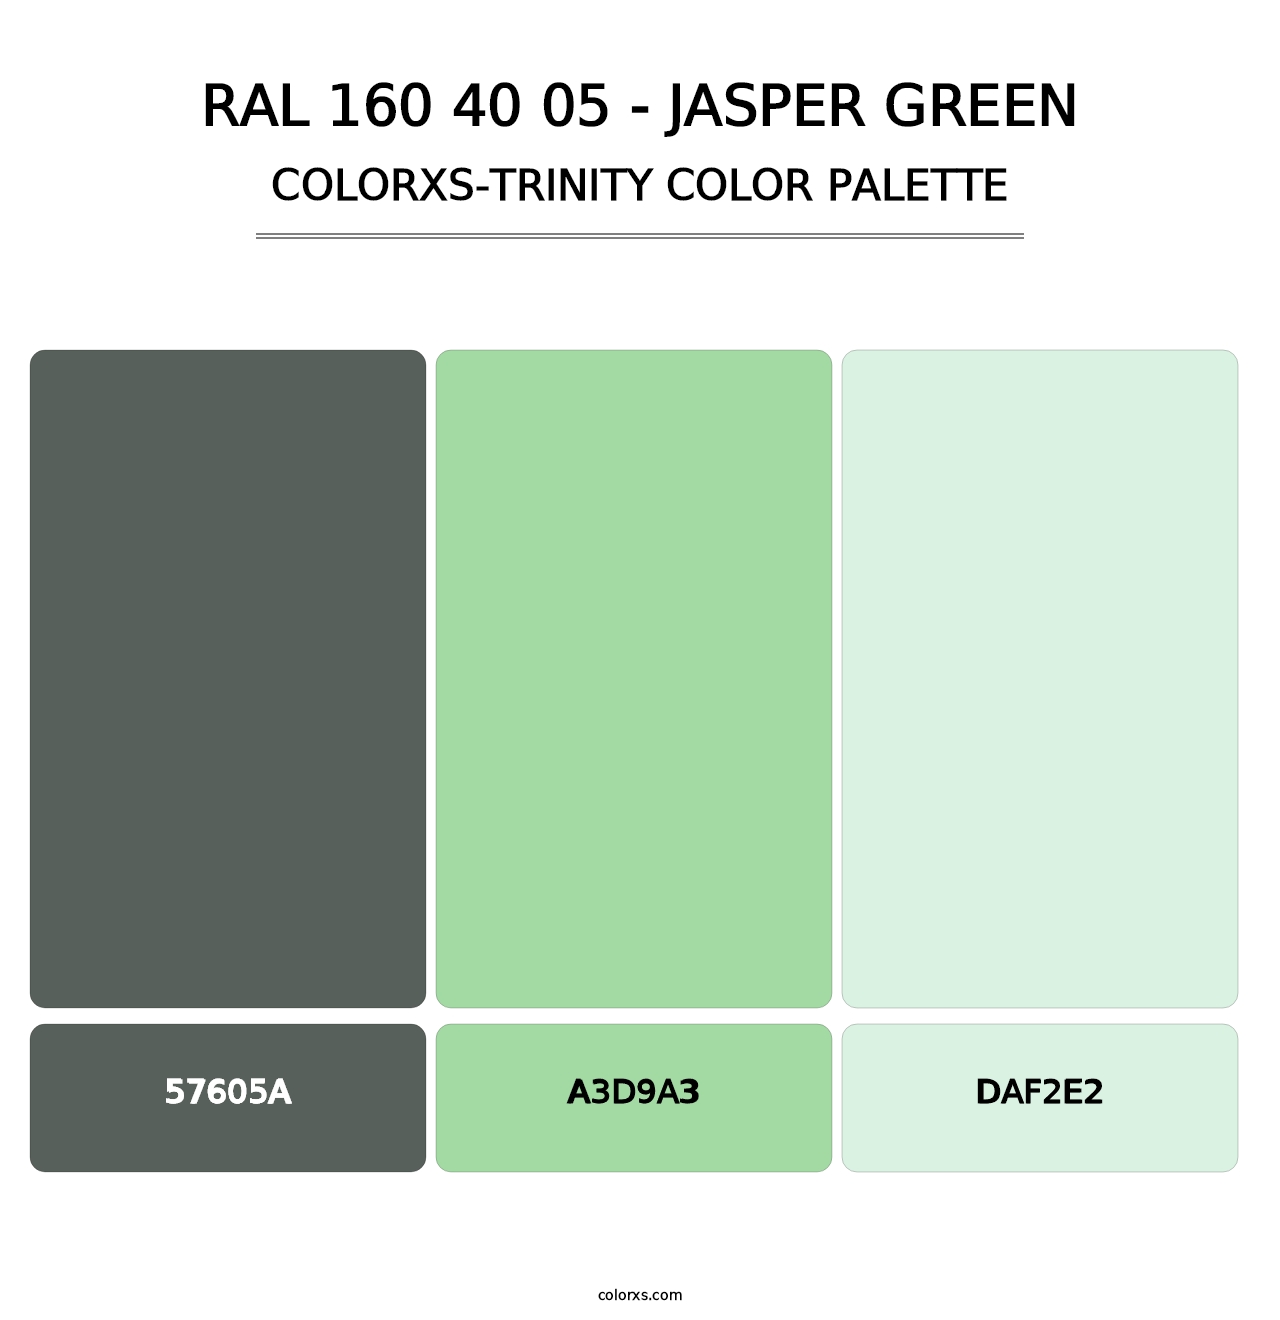 RAL 160 40 05 - Jasper Green - Colorxs Trinity Palette